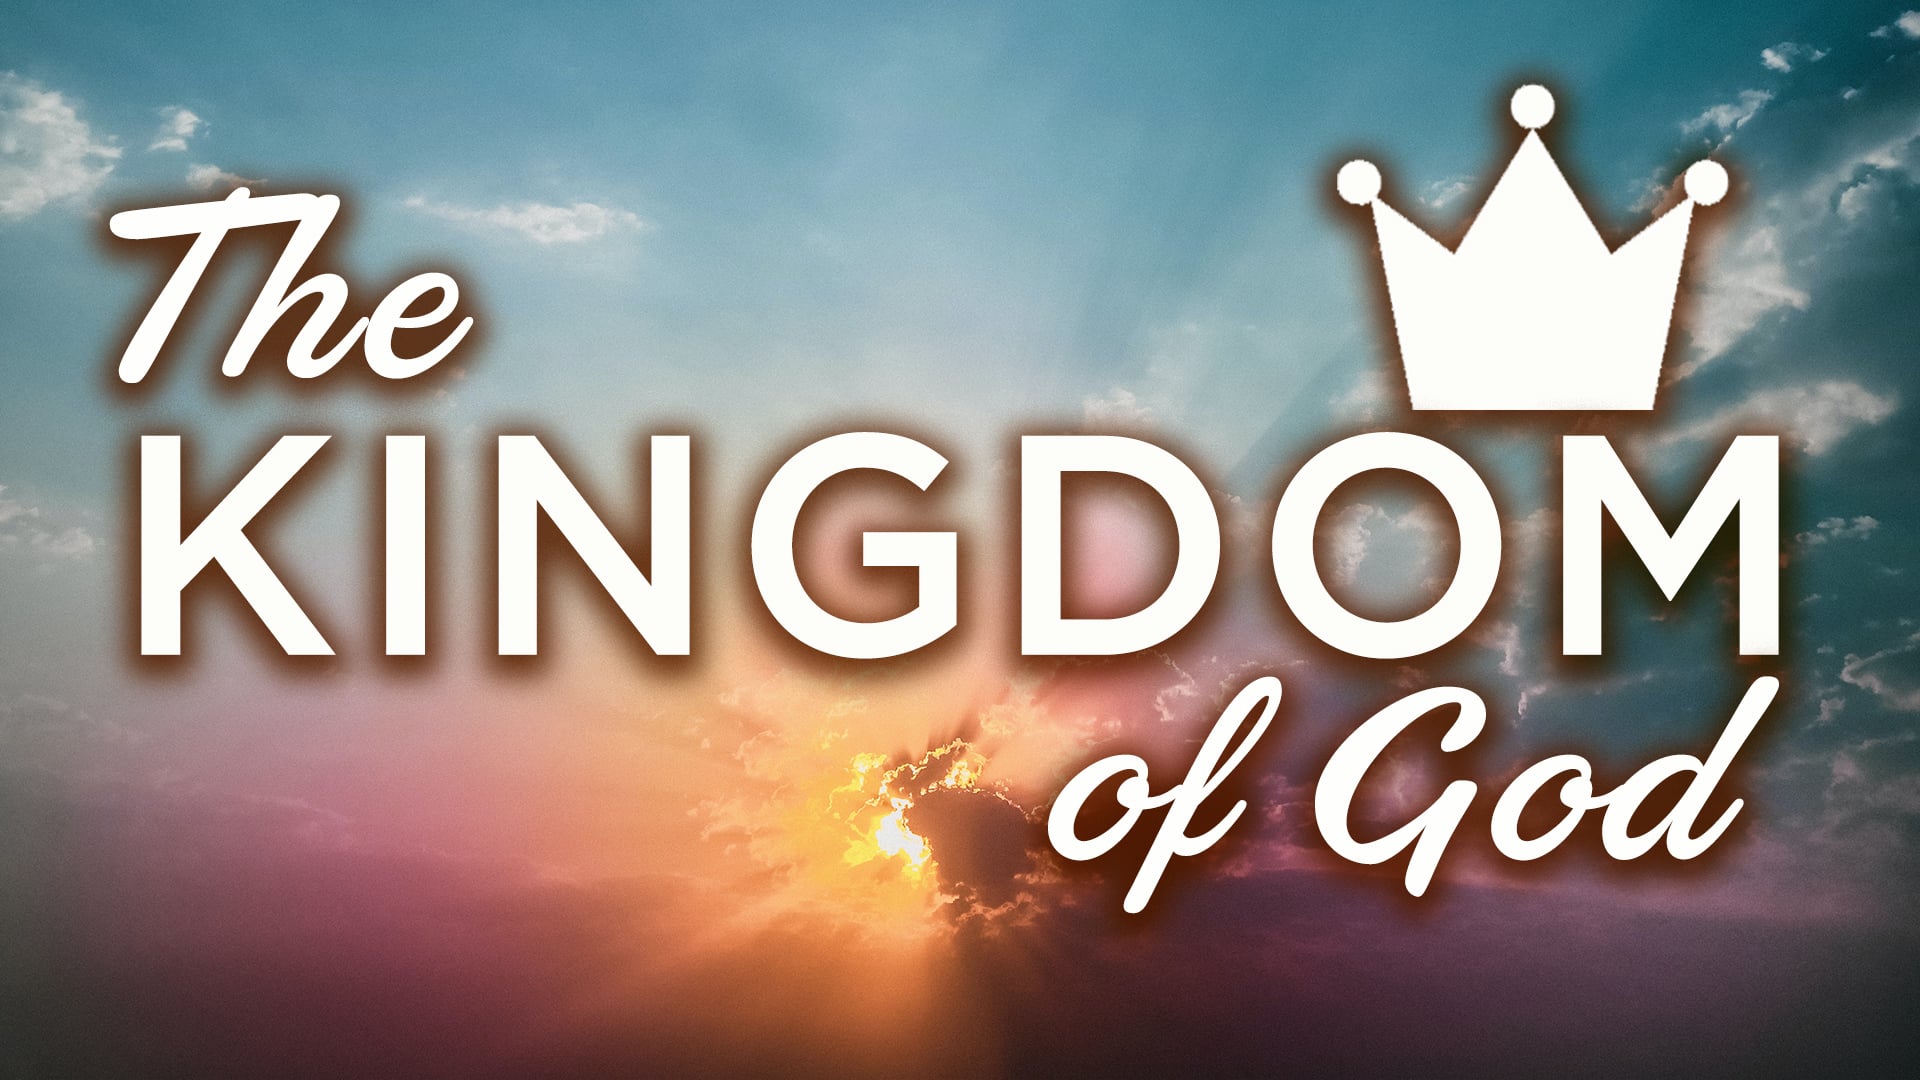 Building the Kingdom